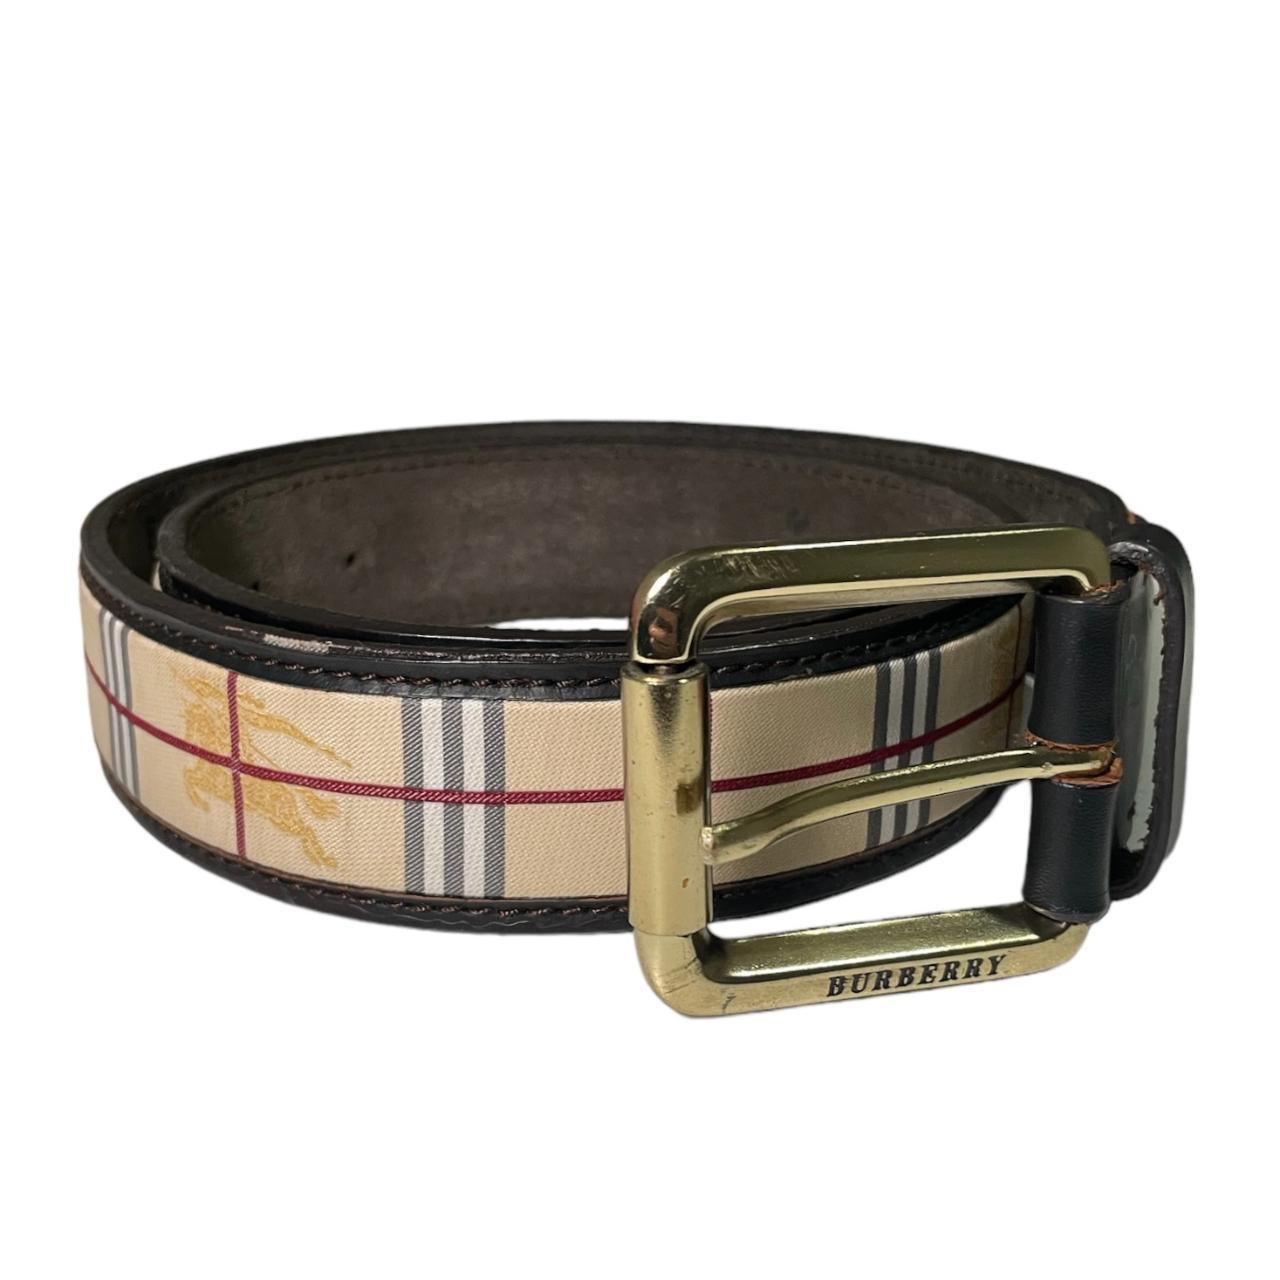 Vintage Burberry check leather belt featuring... - Depop